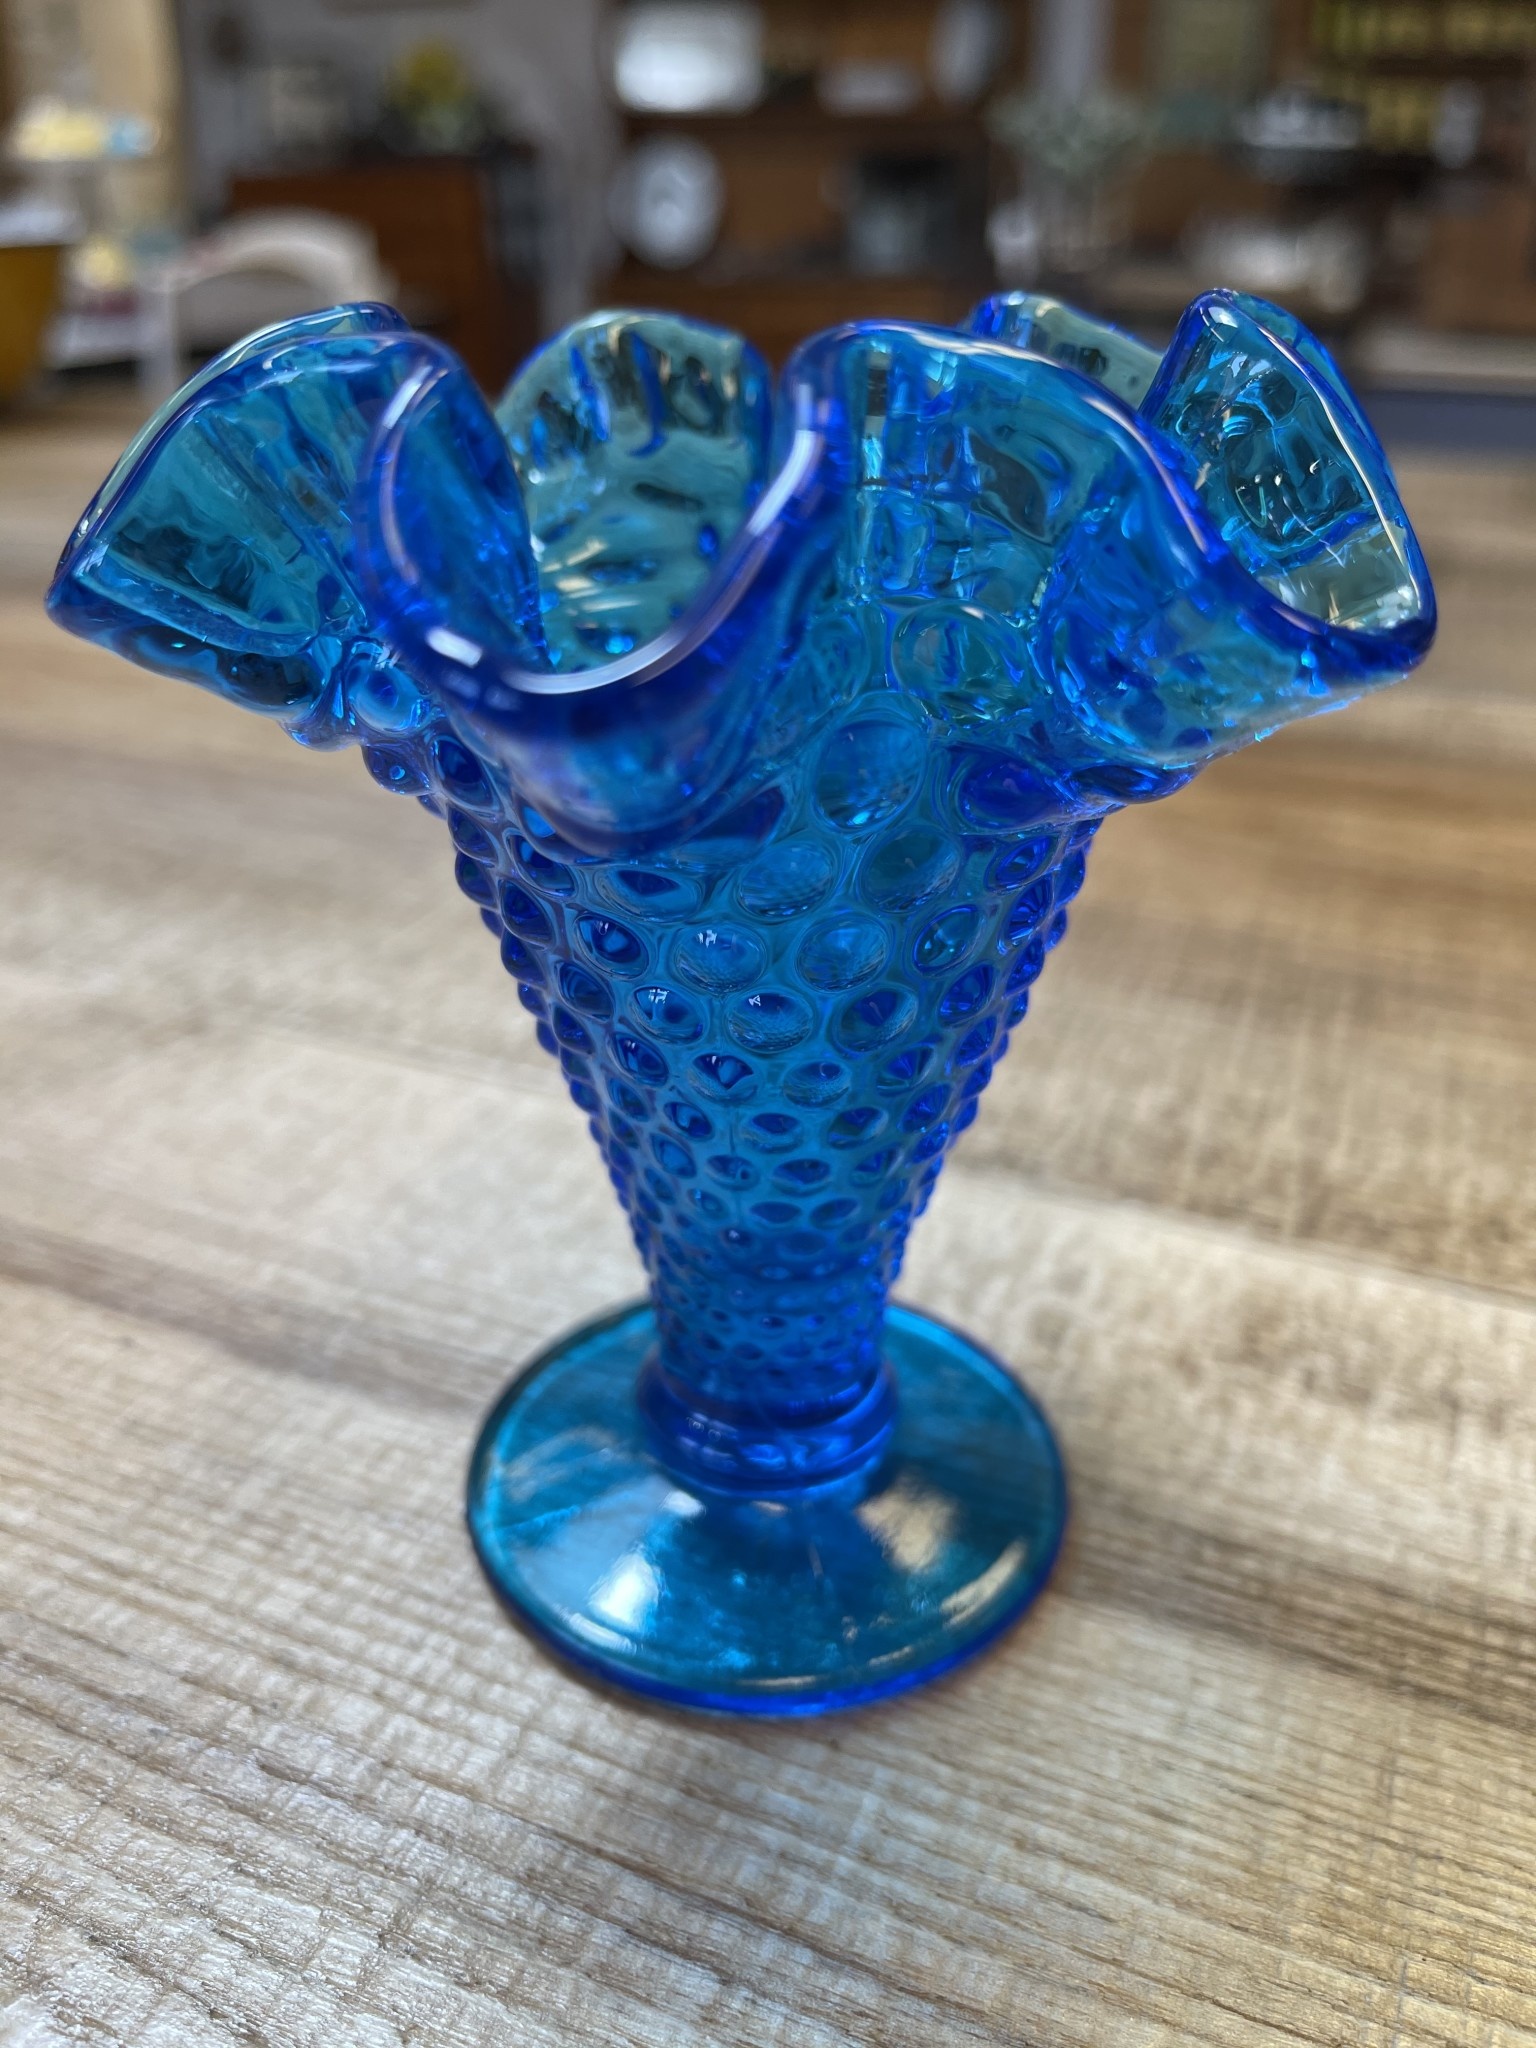 Ruffled and Crimped Optic Dot Vase Fenton Glass